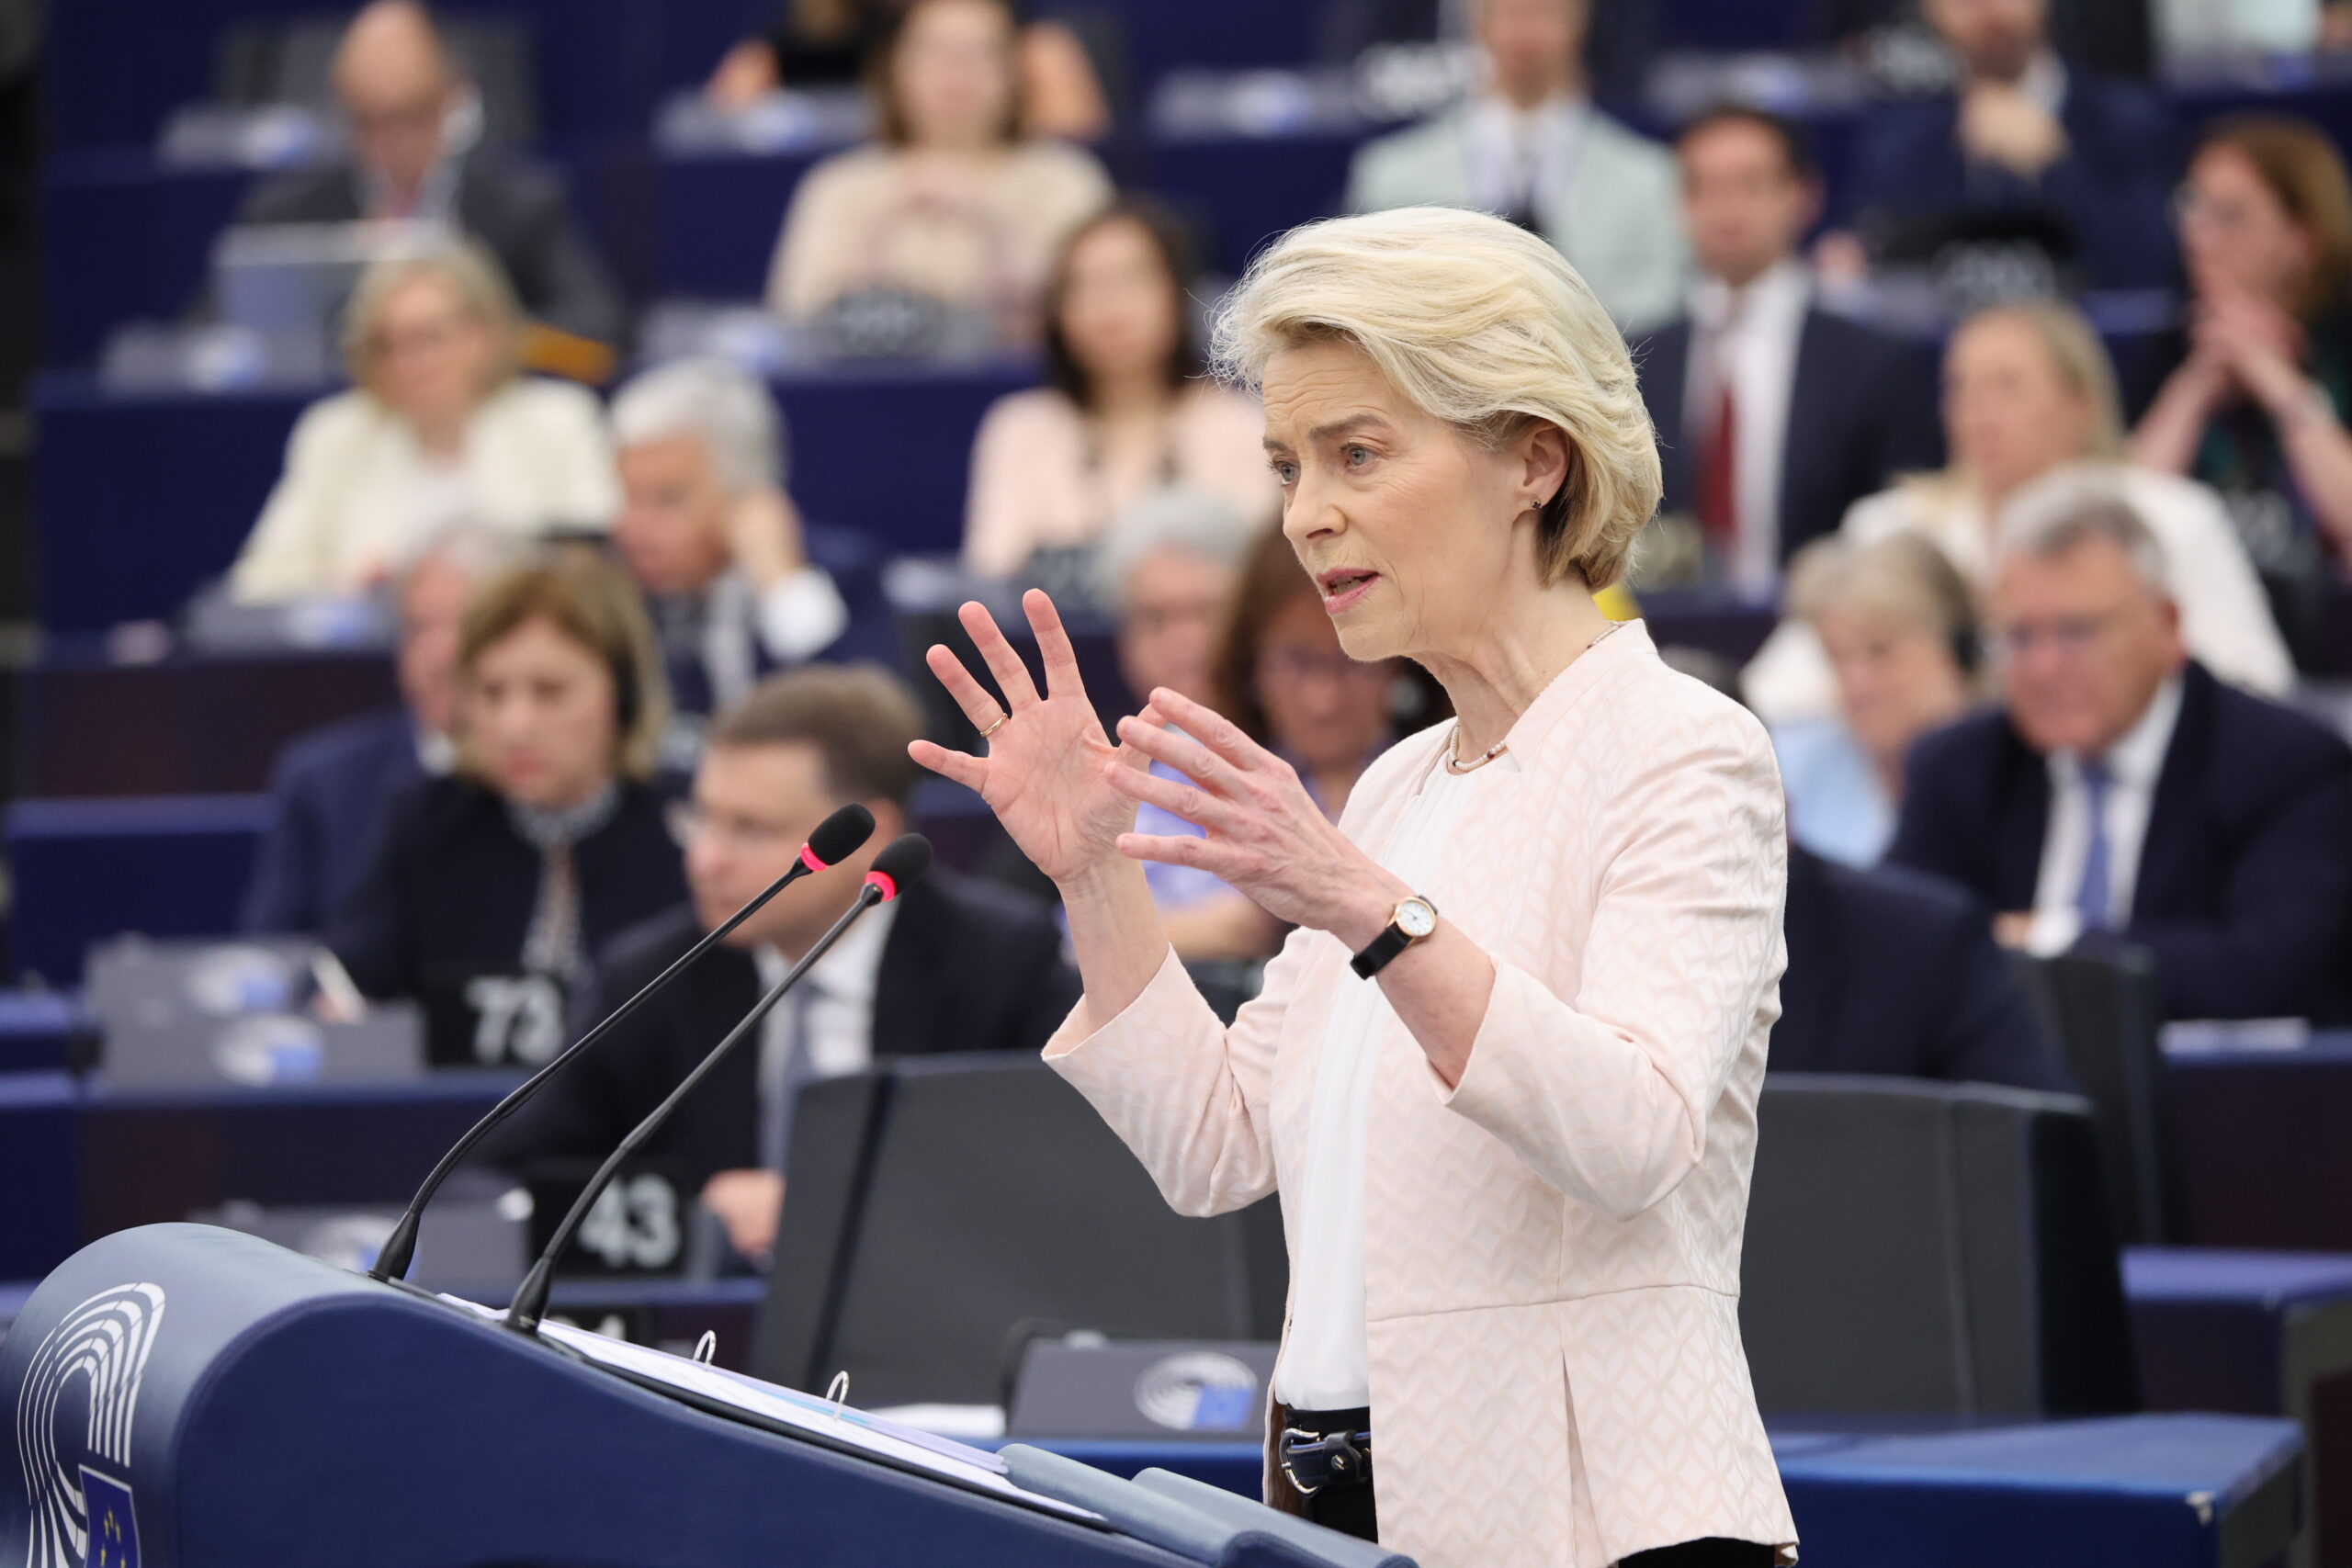 Ursula von der Leyen’s second term: opportunities and concerns for European Defence